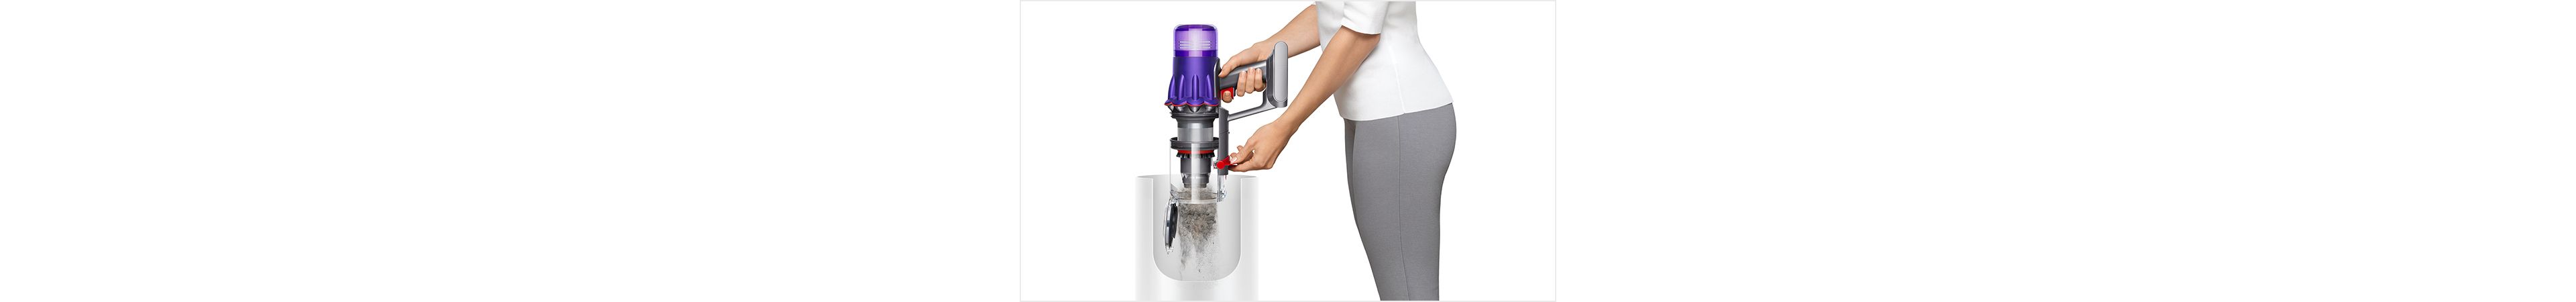 Dyson Digital Slim Fluffy cordless vacuum cleaner | Dyson